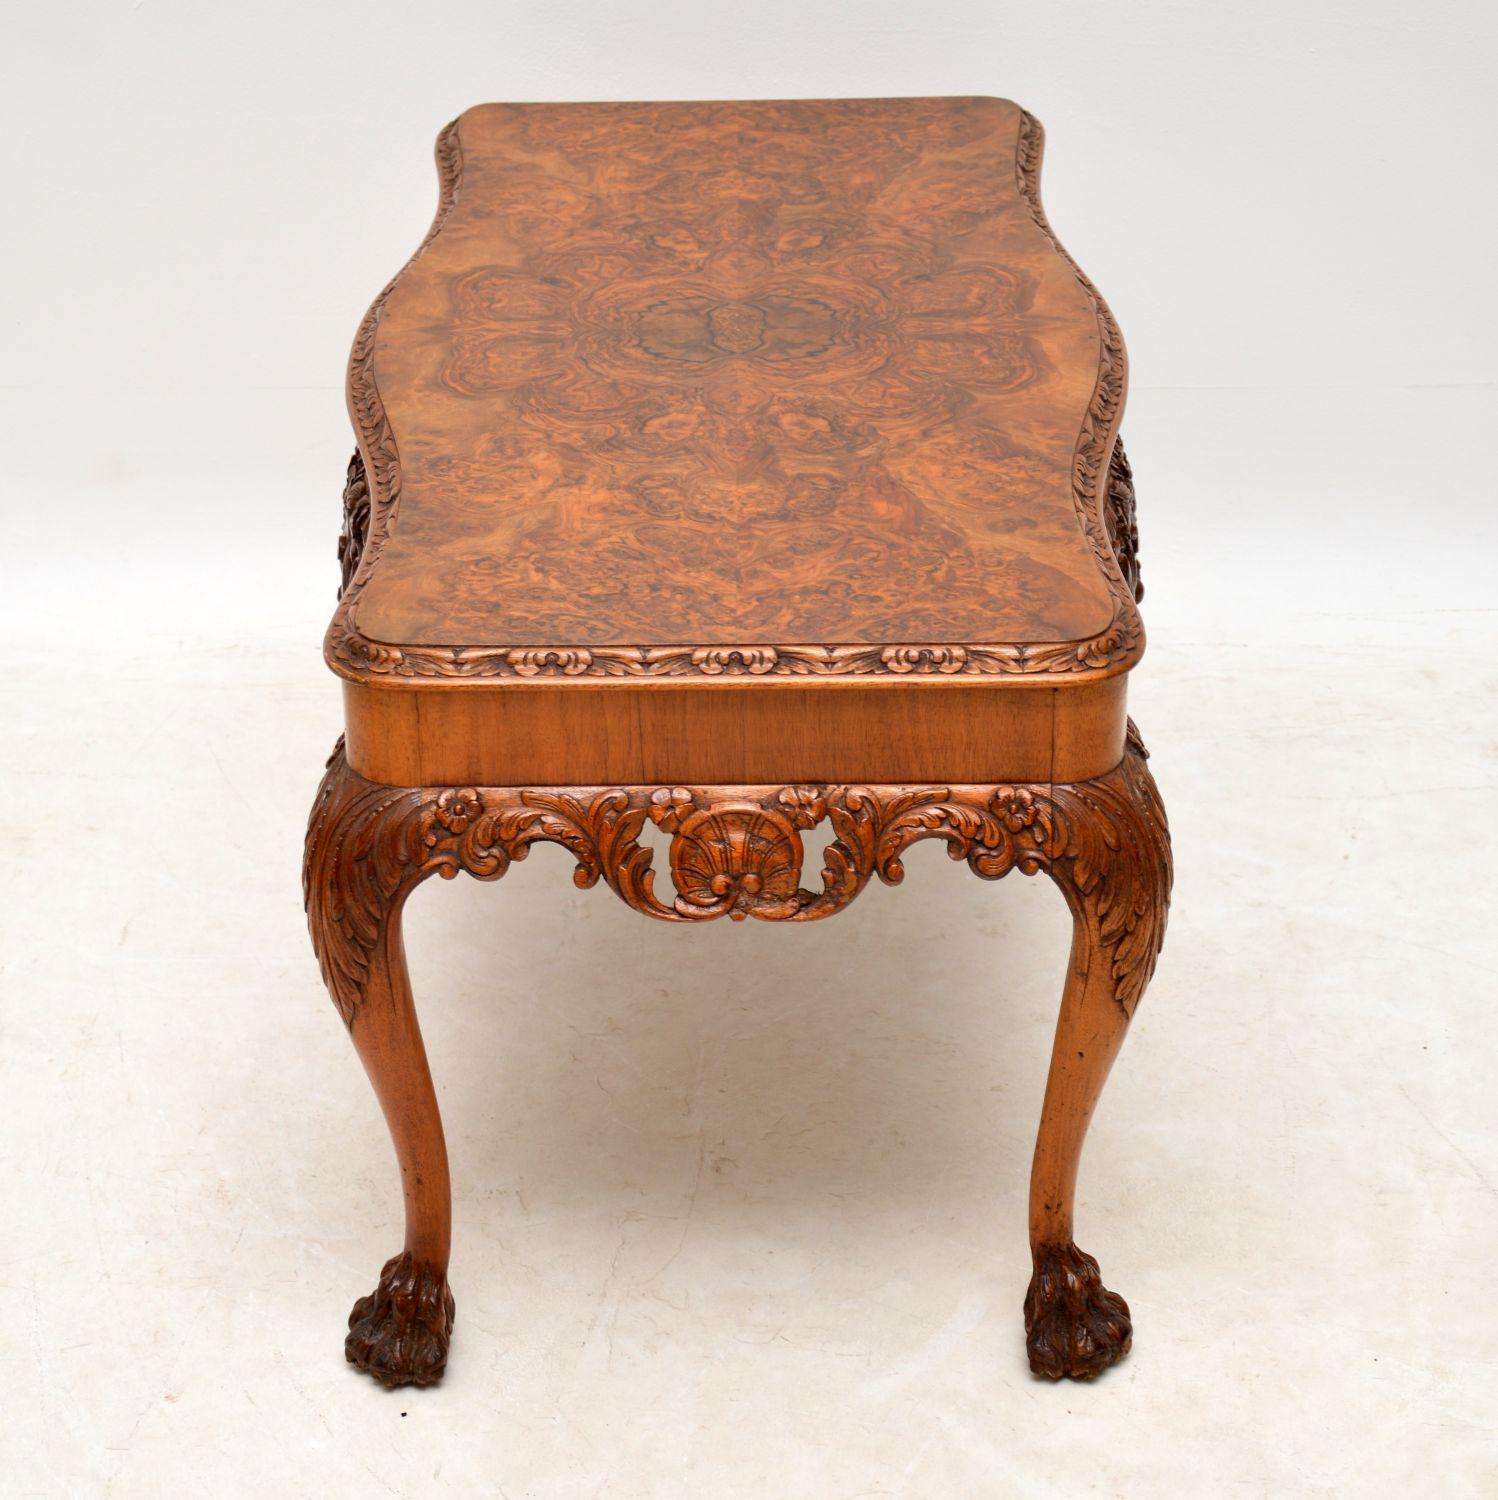 British Antique Burr Walnut Queen Anne Style Coffee Table